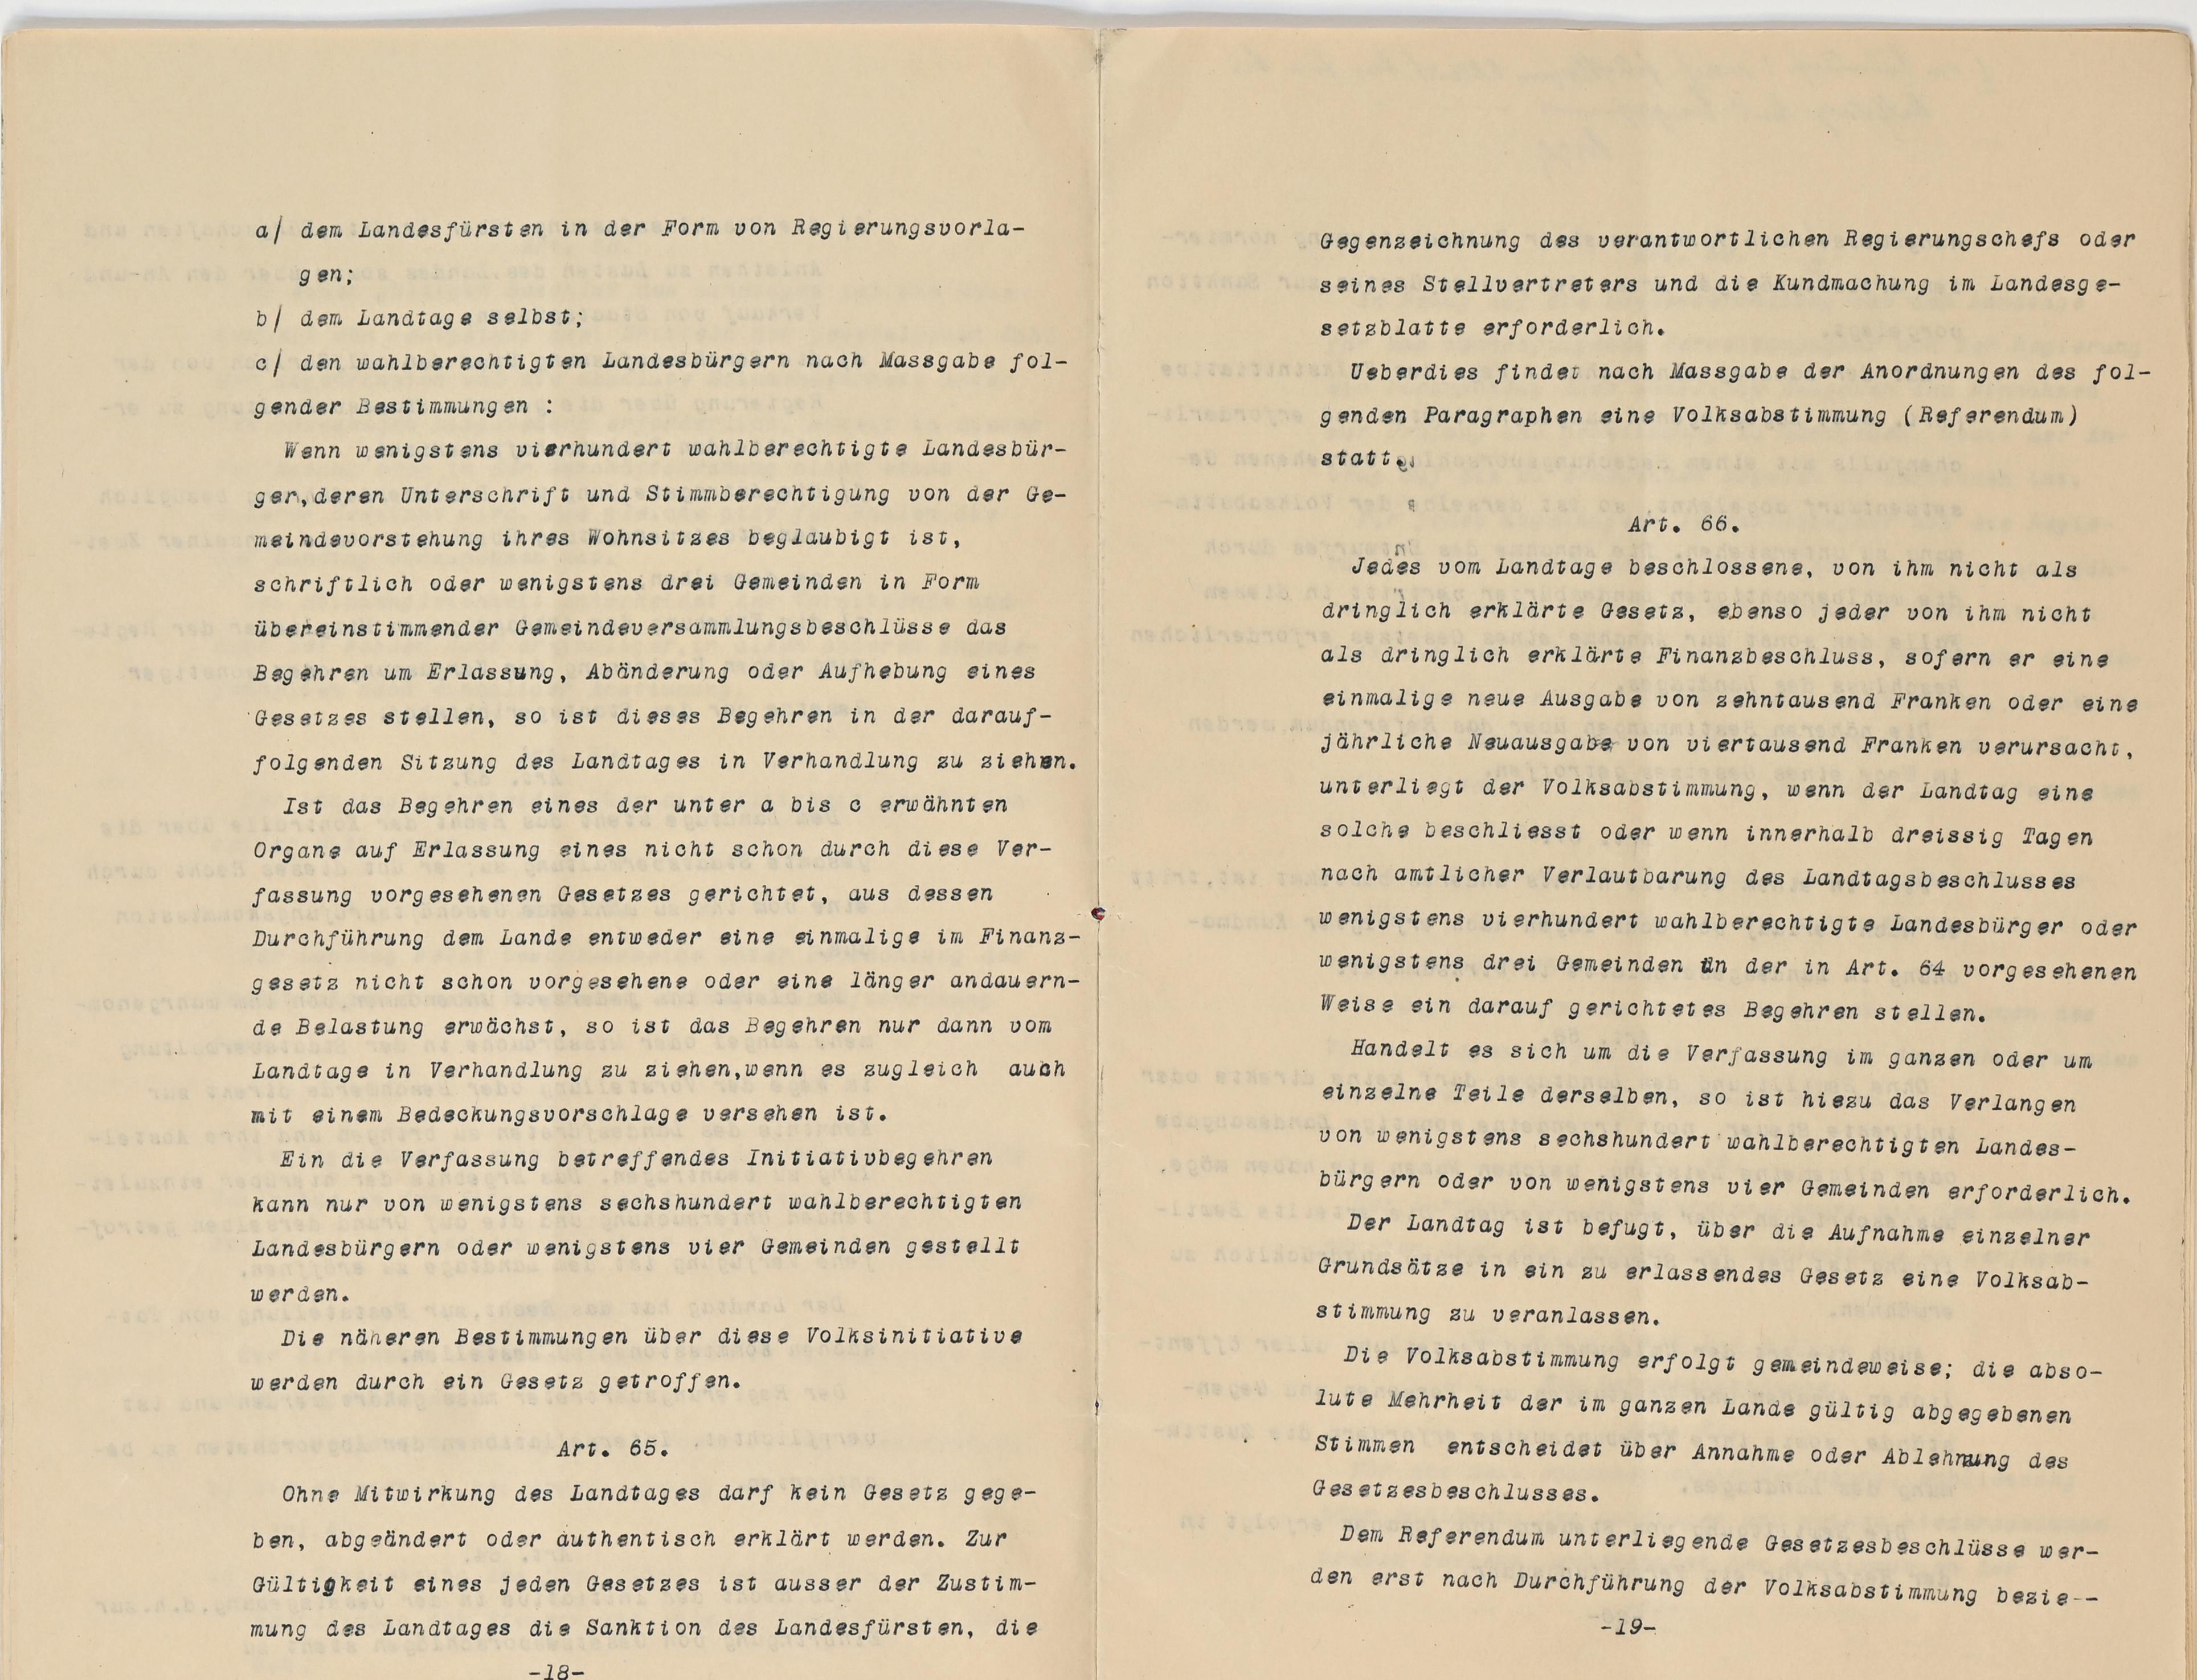 Verfassung 1921 Art. 65 bis Art. 66